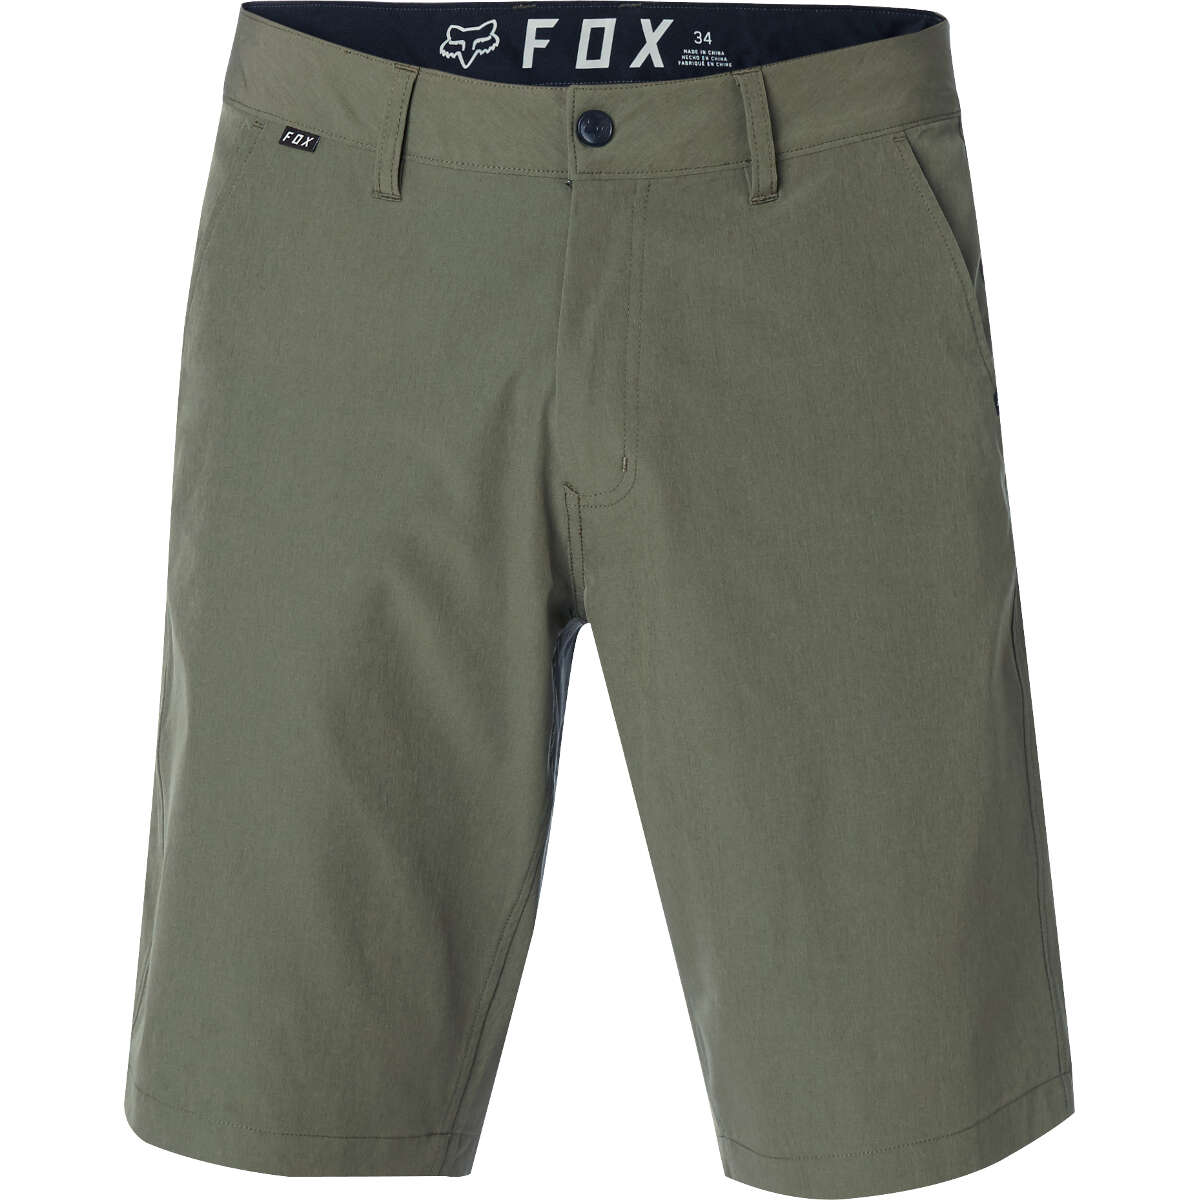 Fox Shorts Essex Tech Stretch Fatigue Green